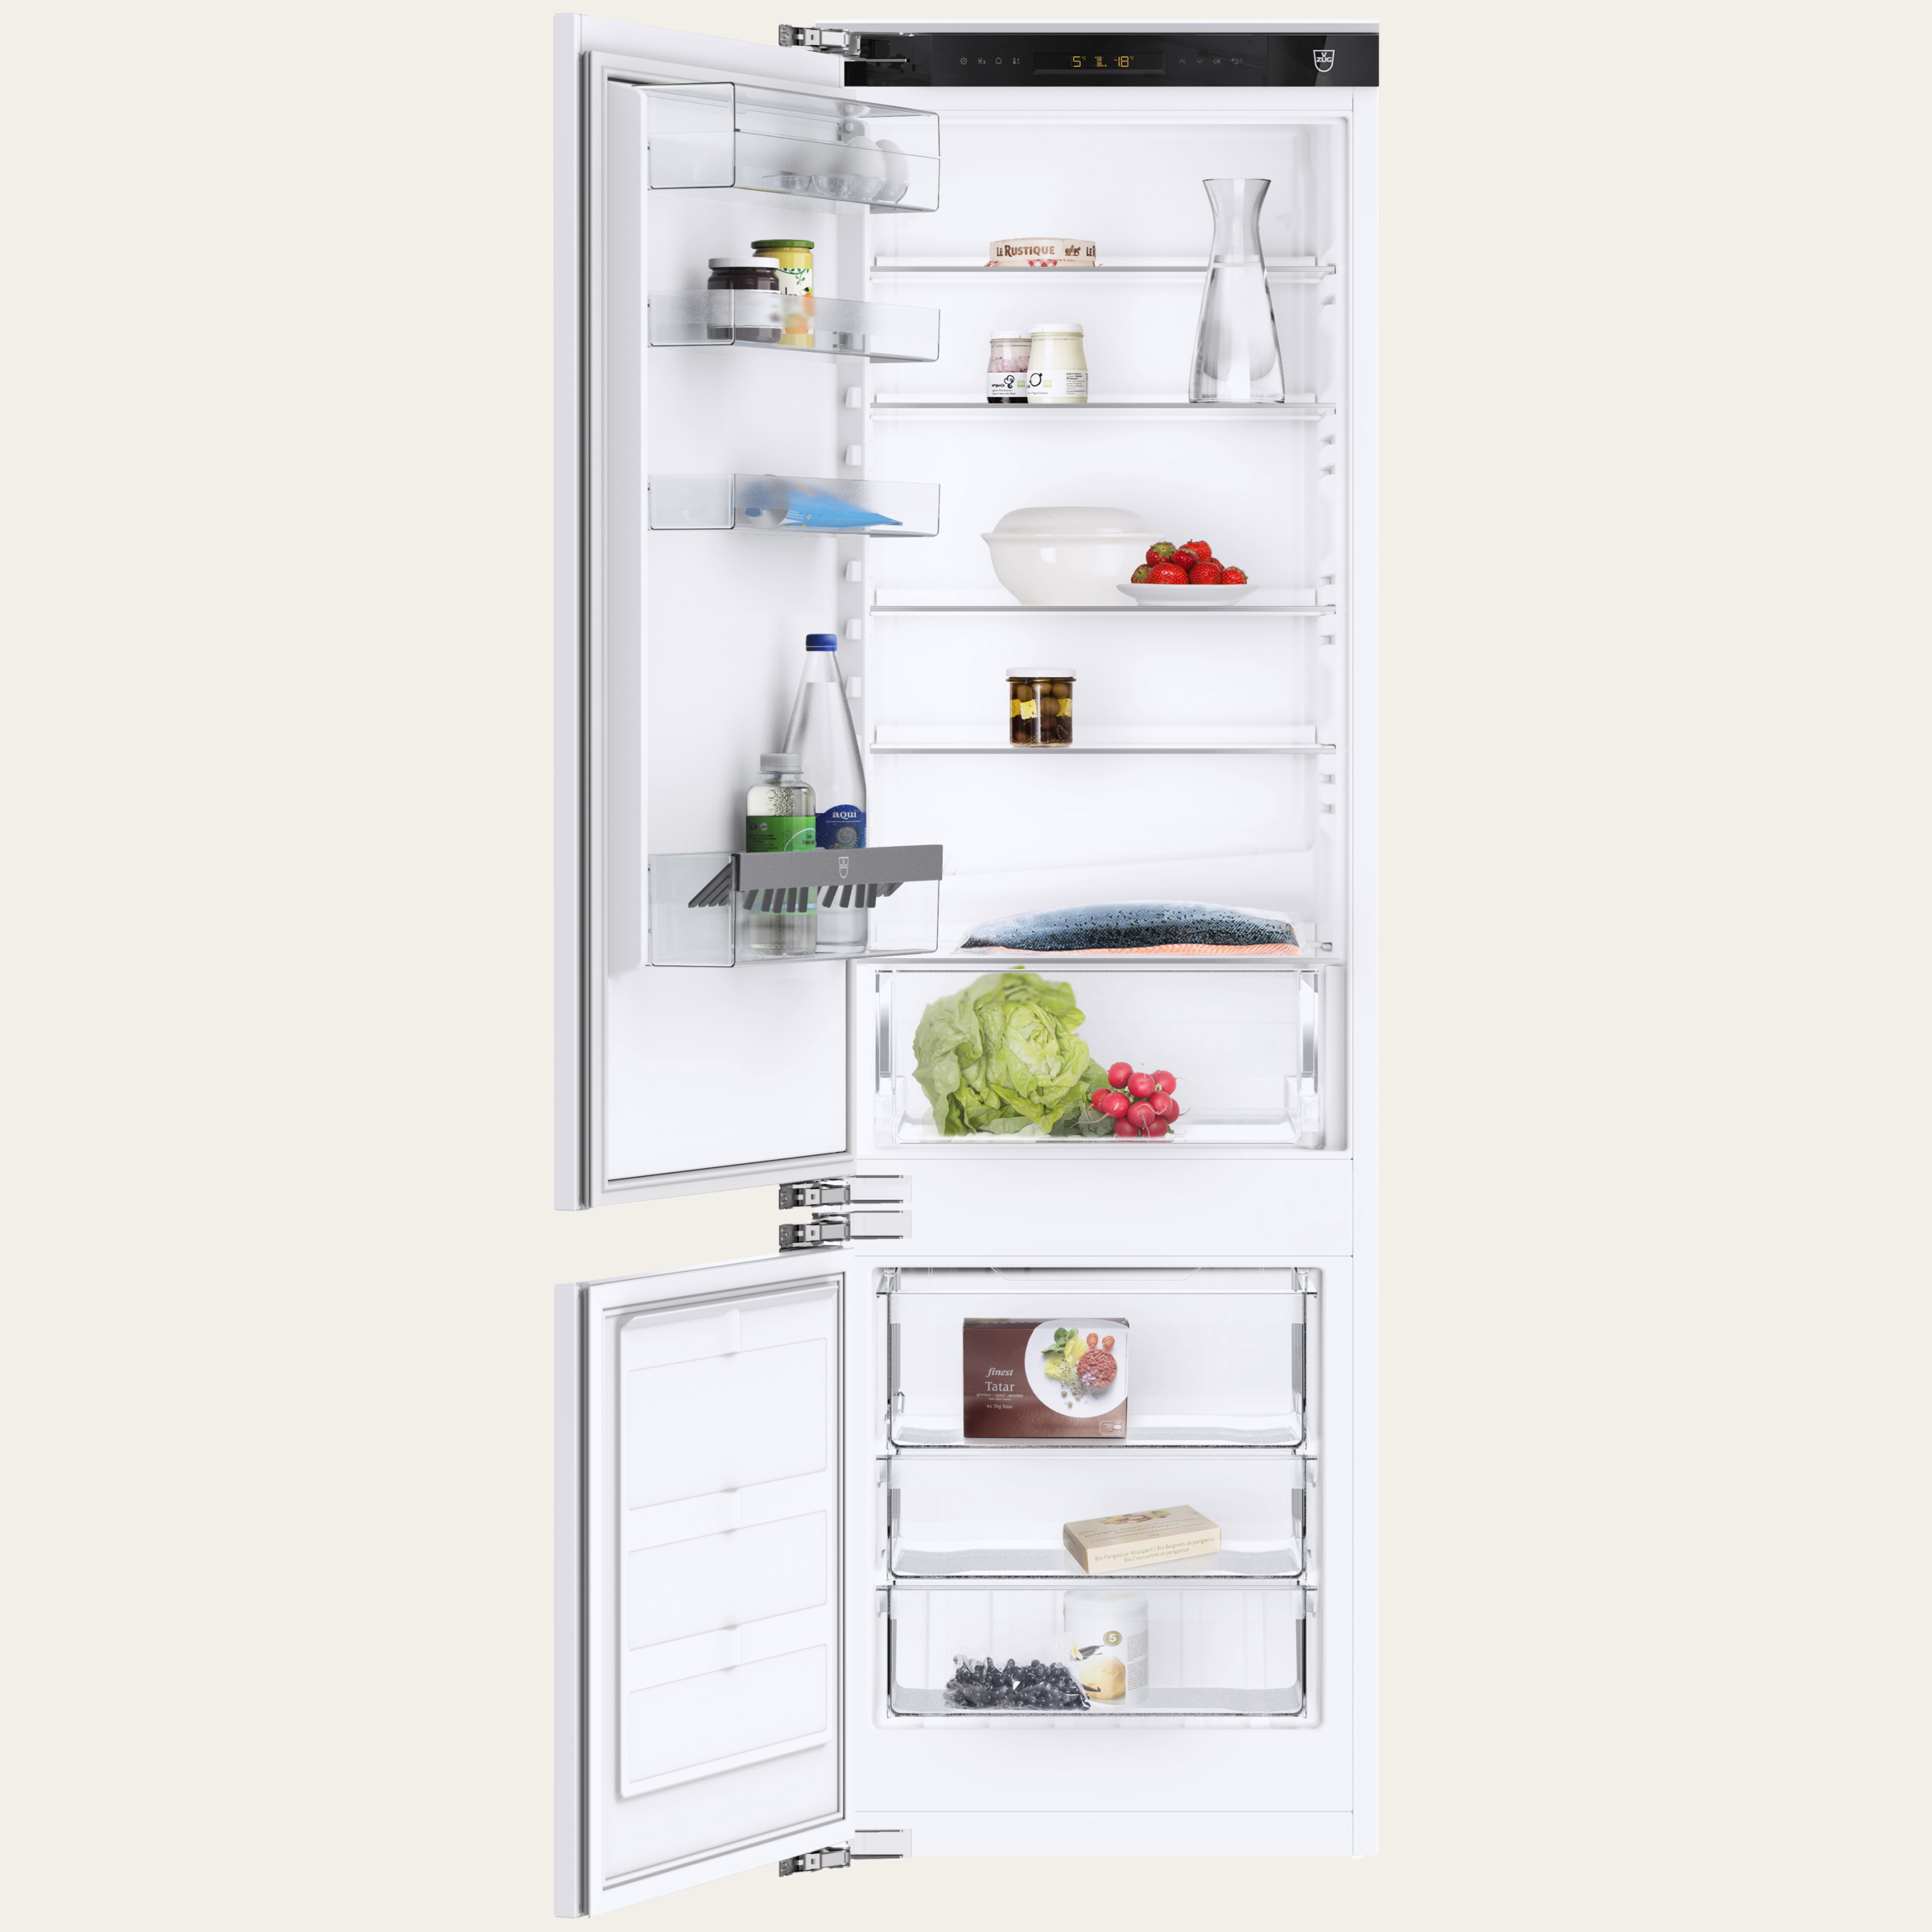 V-ZUG Refrigerators, CombiCooler V2000 178NI, Standard width: 60 cm, Standard height: 177.8 cm, Fully integratable, Door hinge: Left, TouchControl, NoFrost